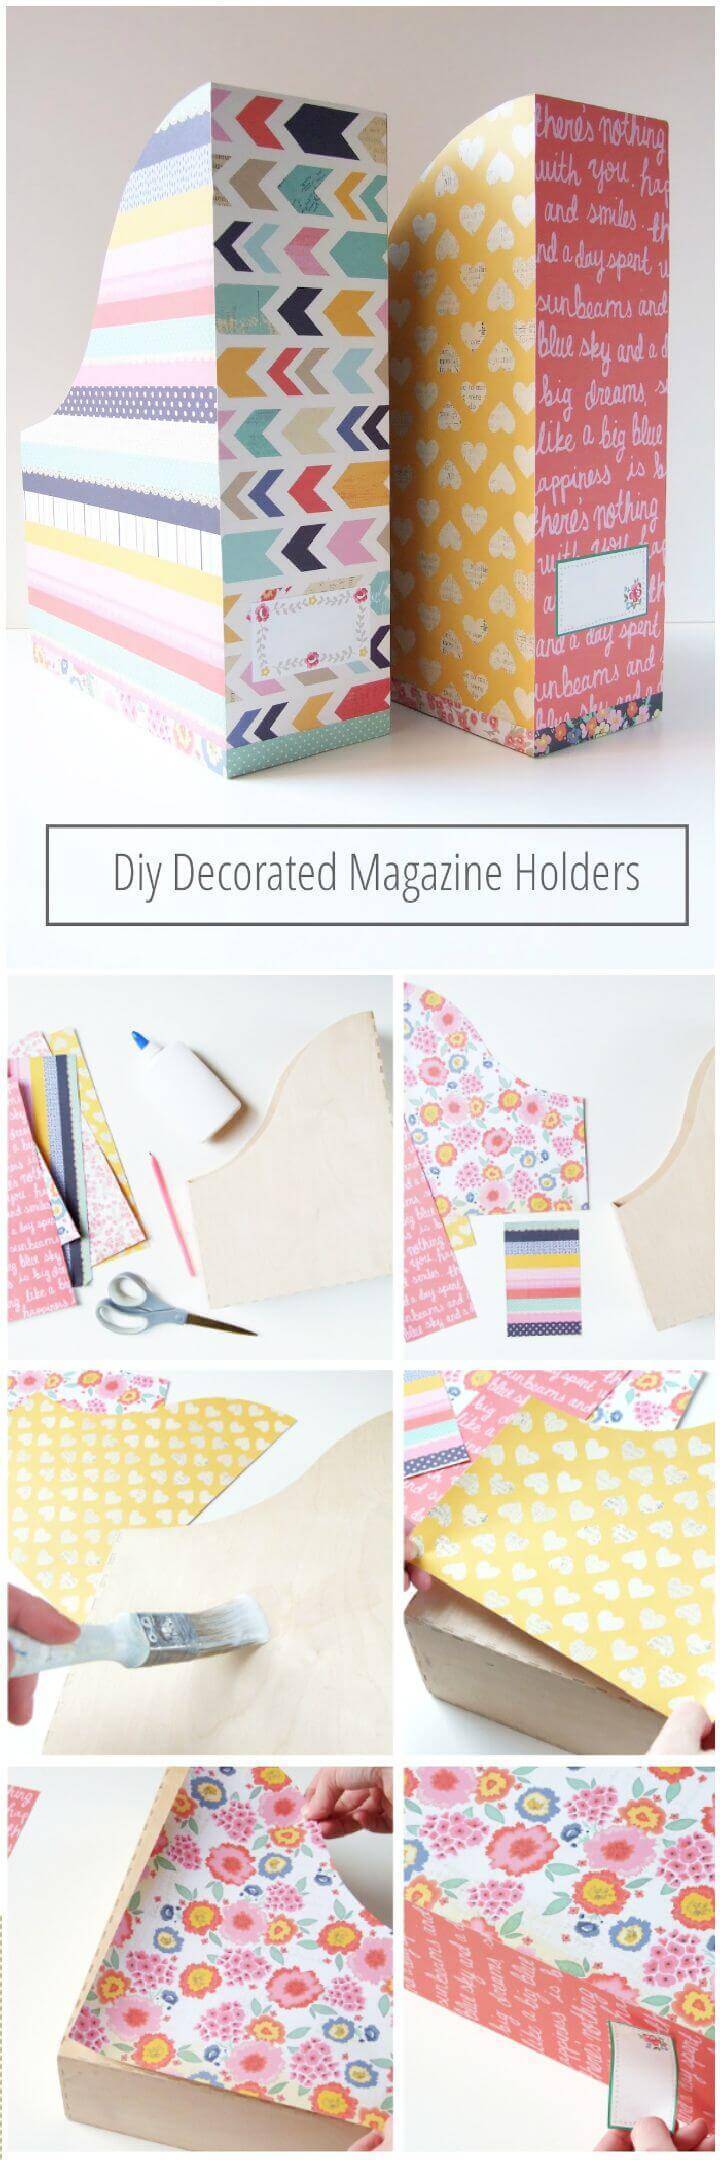 DIY Magazine Dacorated Holder